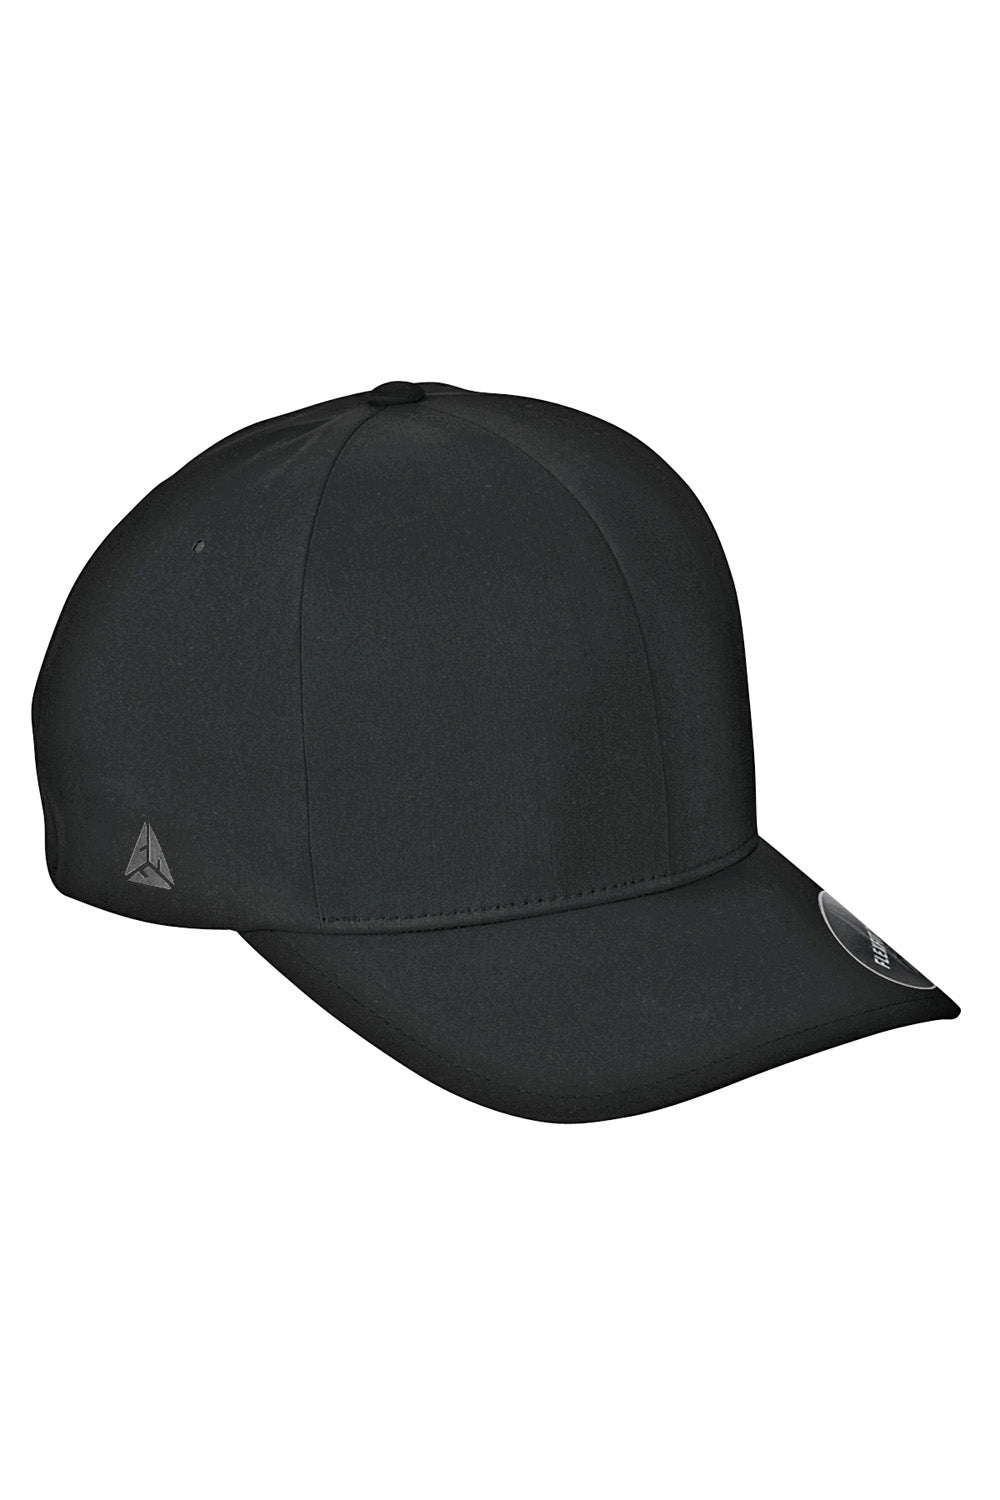 Flexfit YP180 Mens Moisture Wicking Stretch Fit Hat Black Front